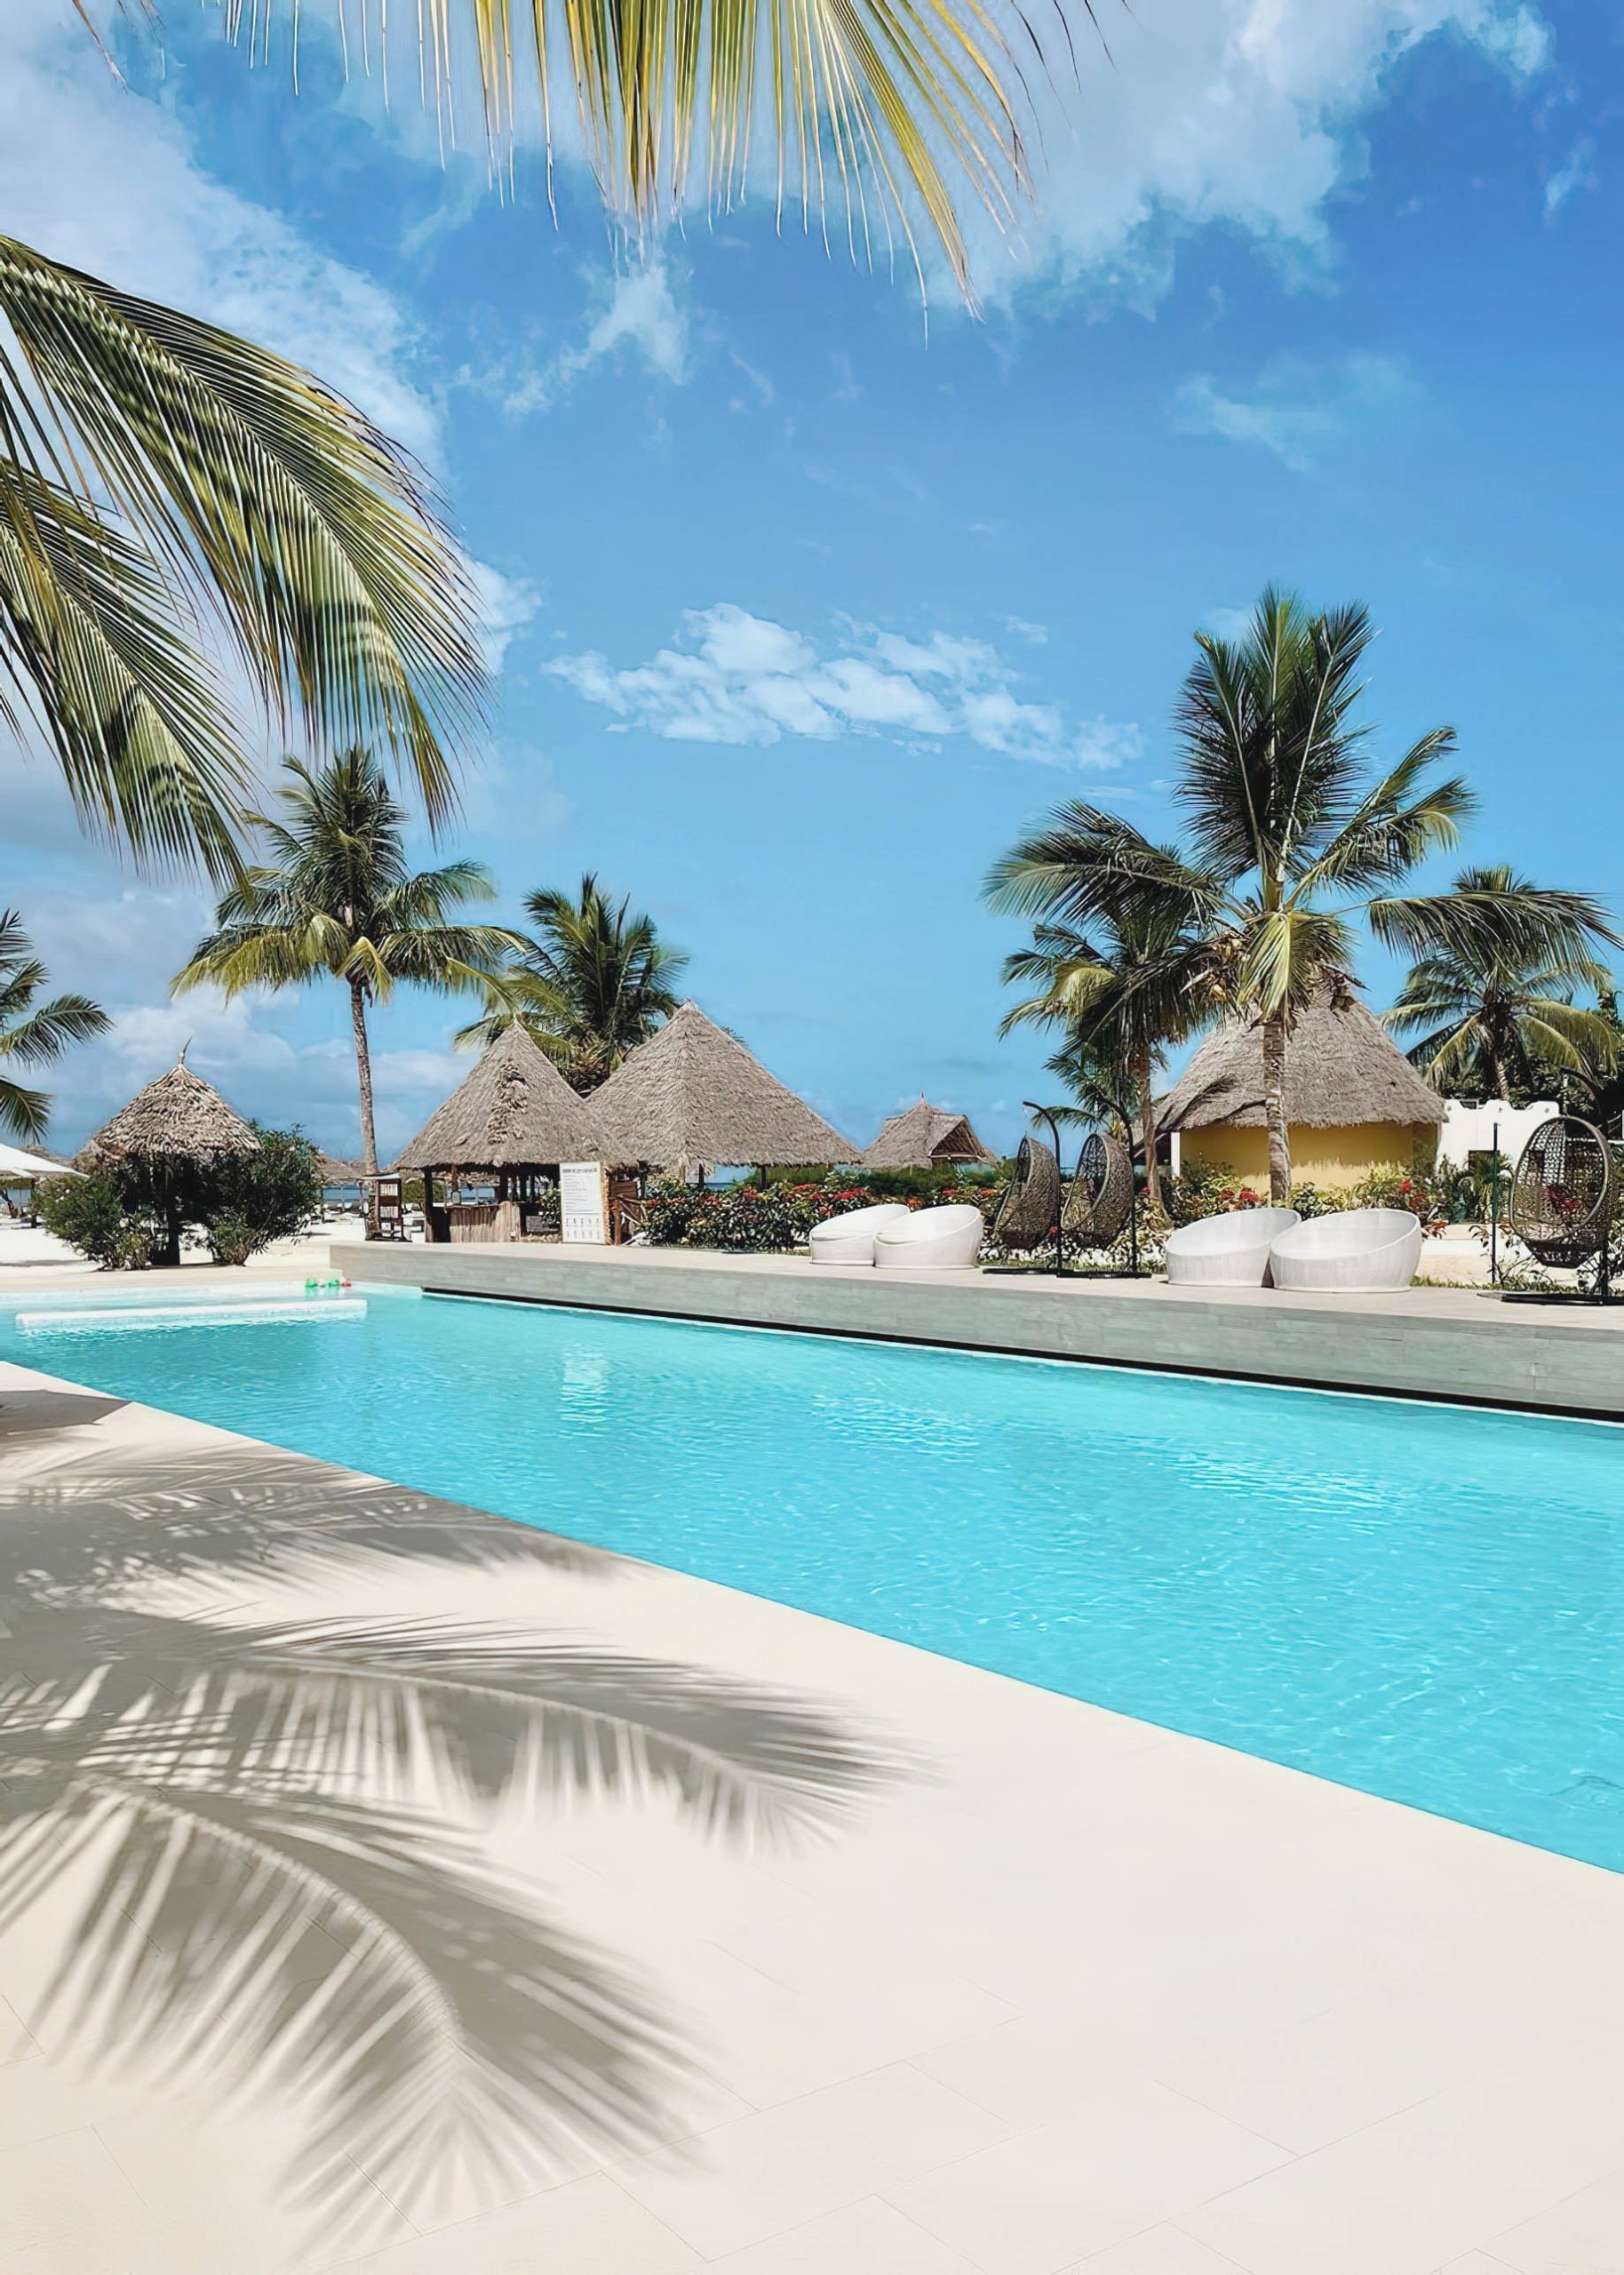 Gold Zanzibar Beach House & Spa Resort – Nungwi, Zanzibar, Tanzania – Pool Deck